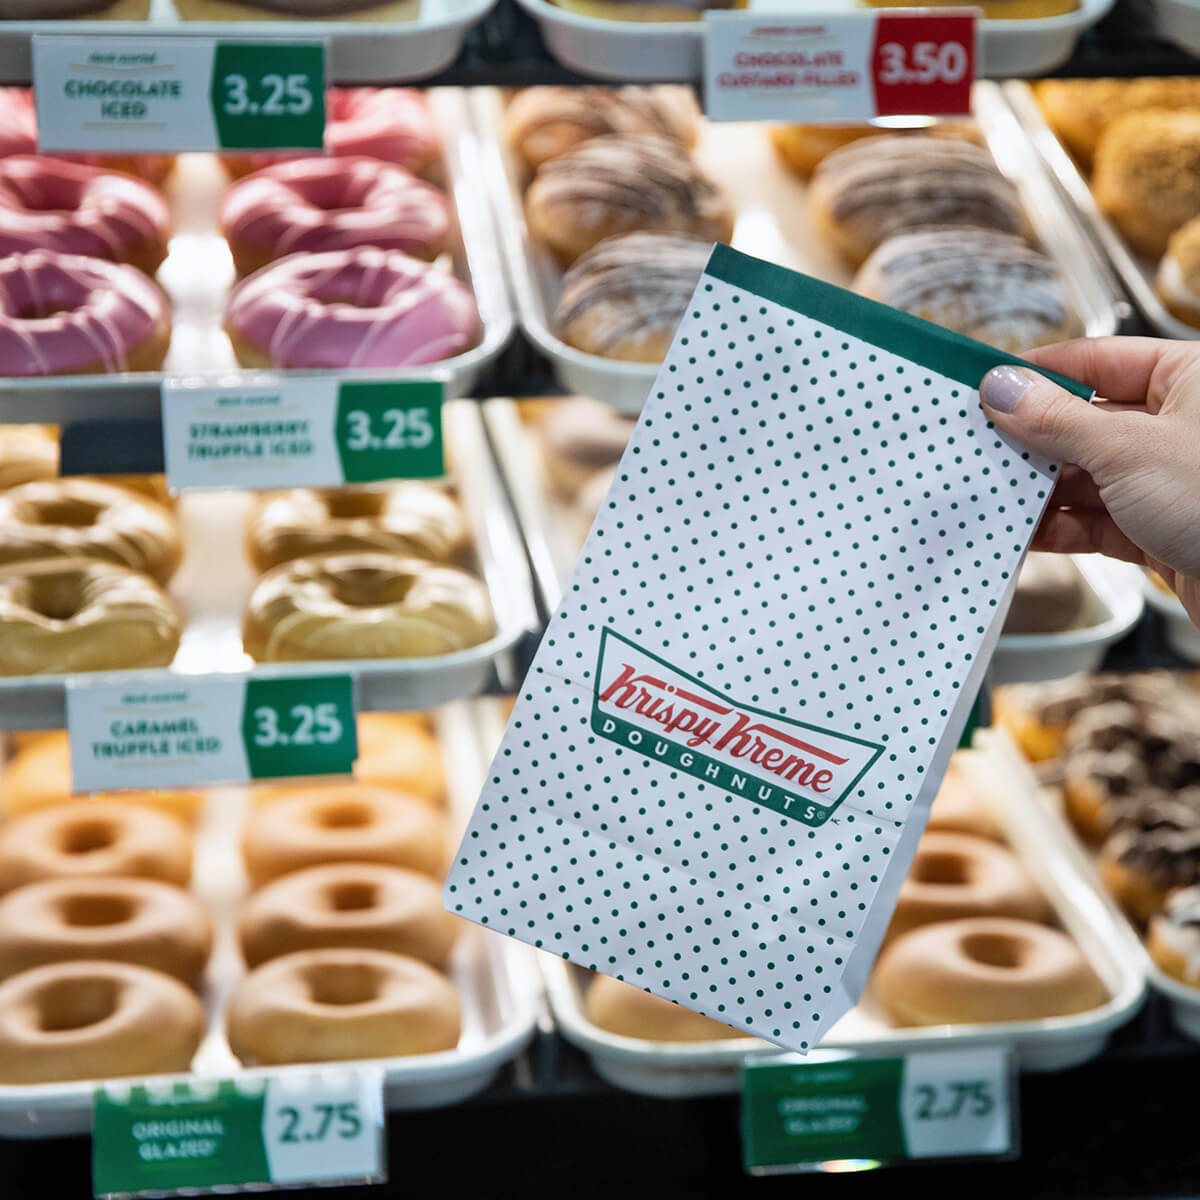 Krispy Kreme doughnuts are made daily